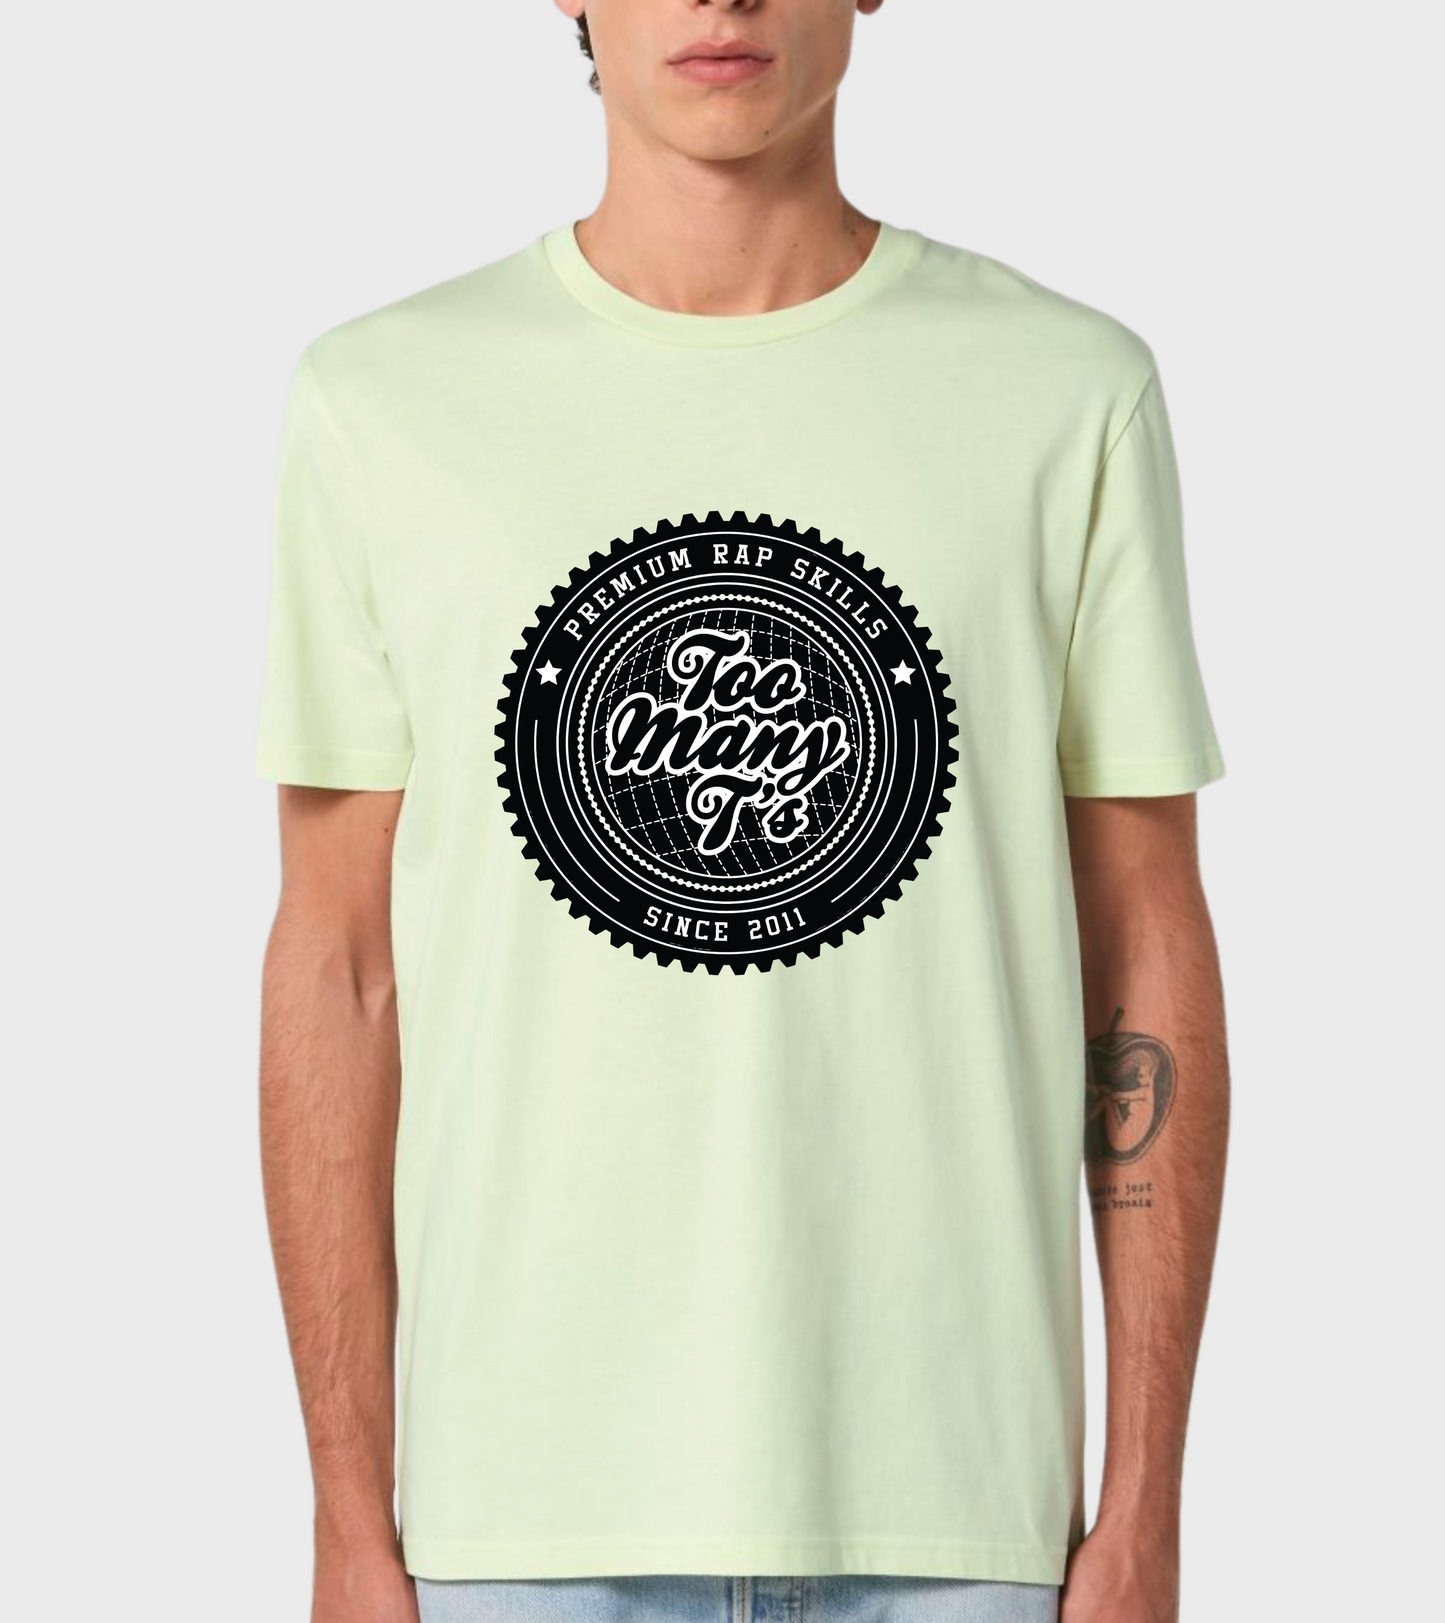 Mint green regular fit t-shirt with black premium rap skills design.